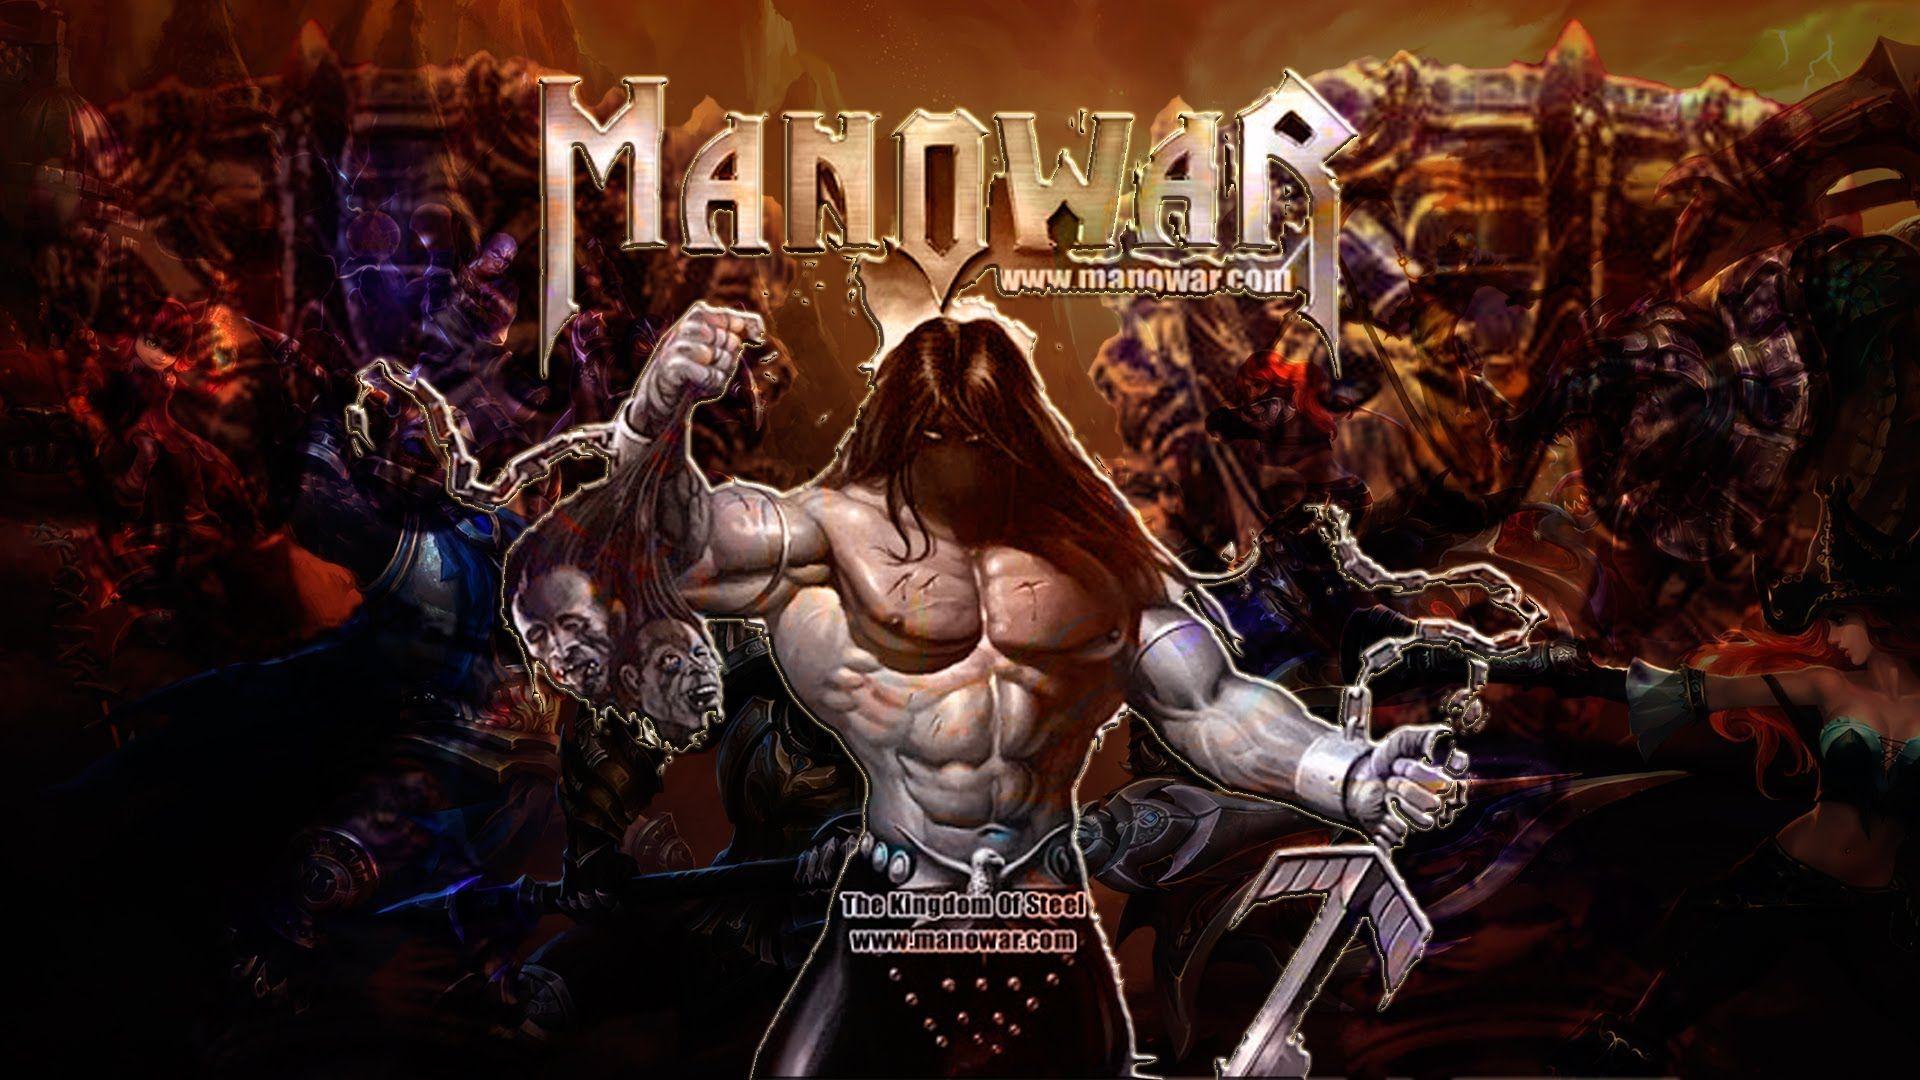 manowar warrior of the world free download